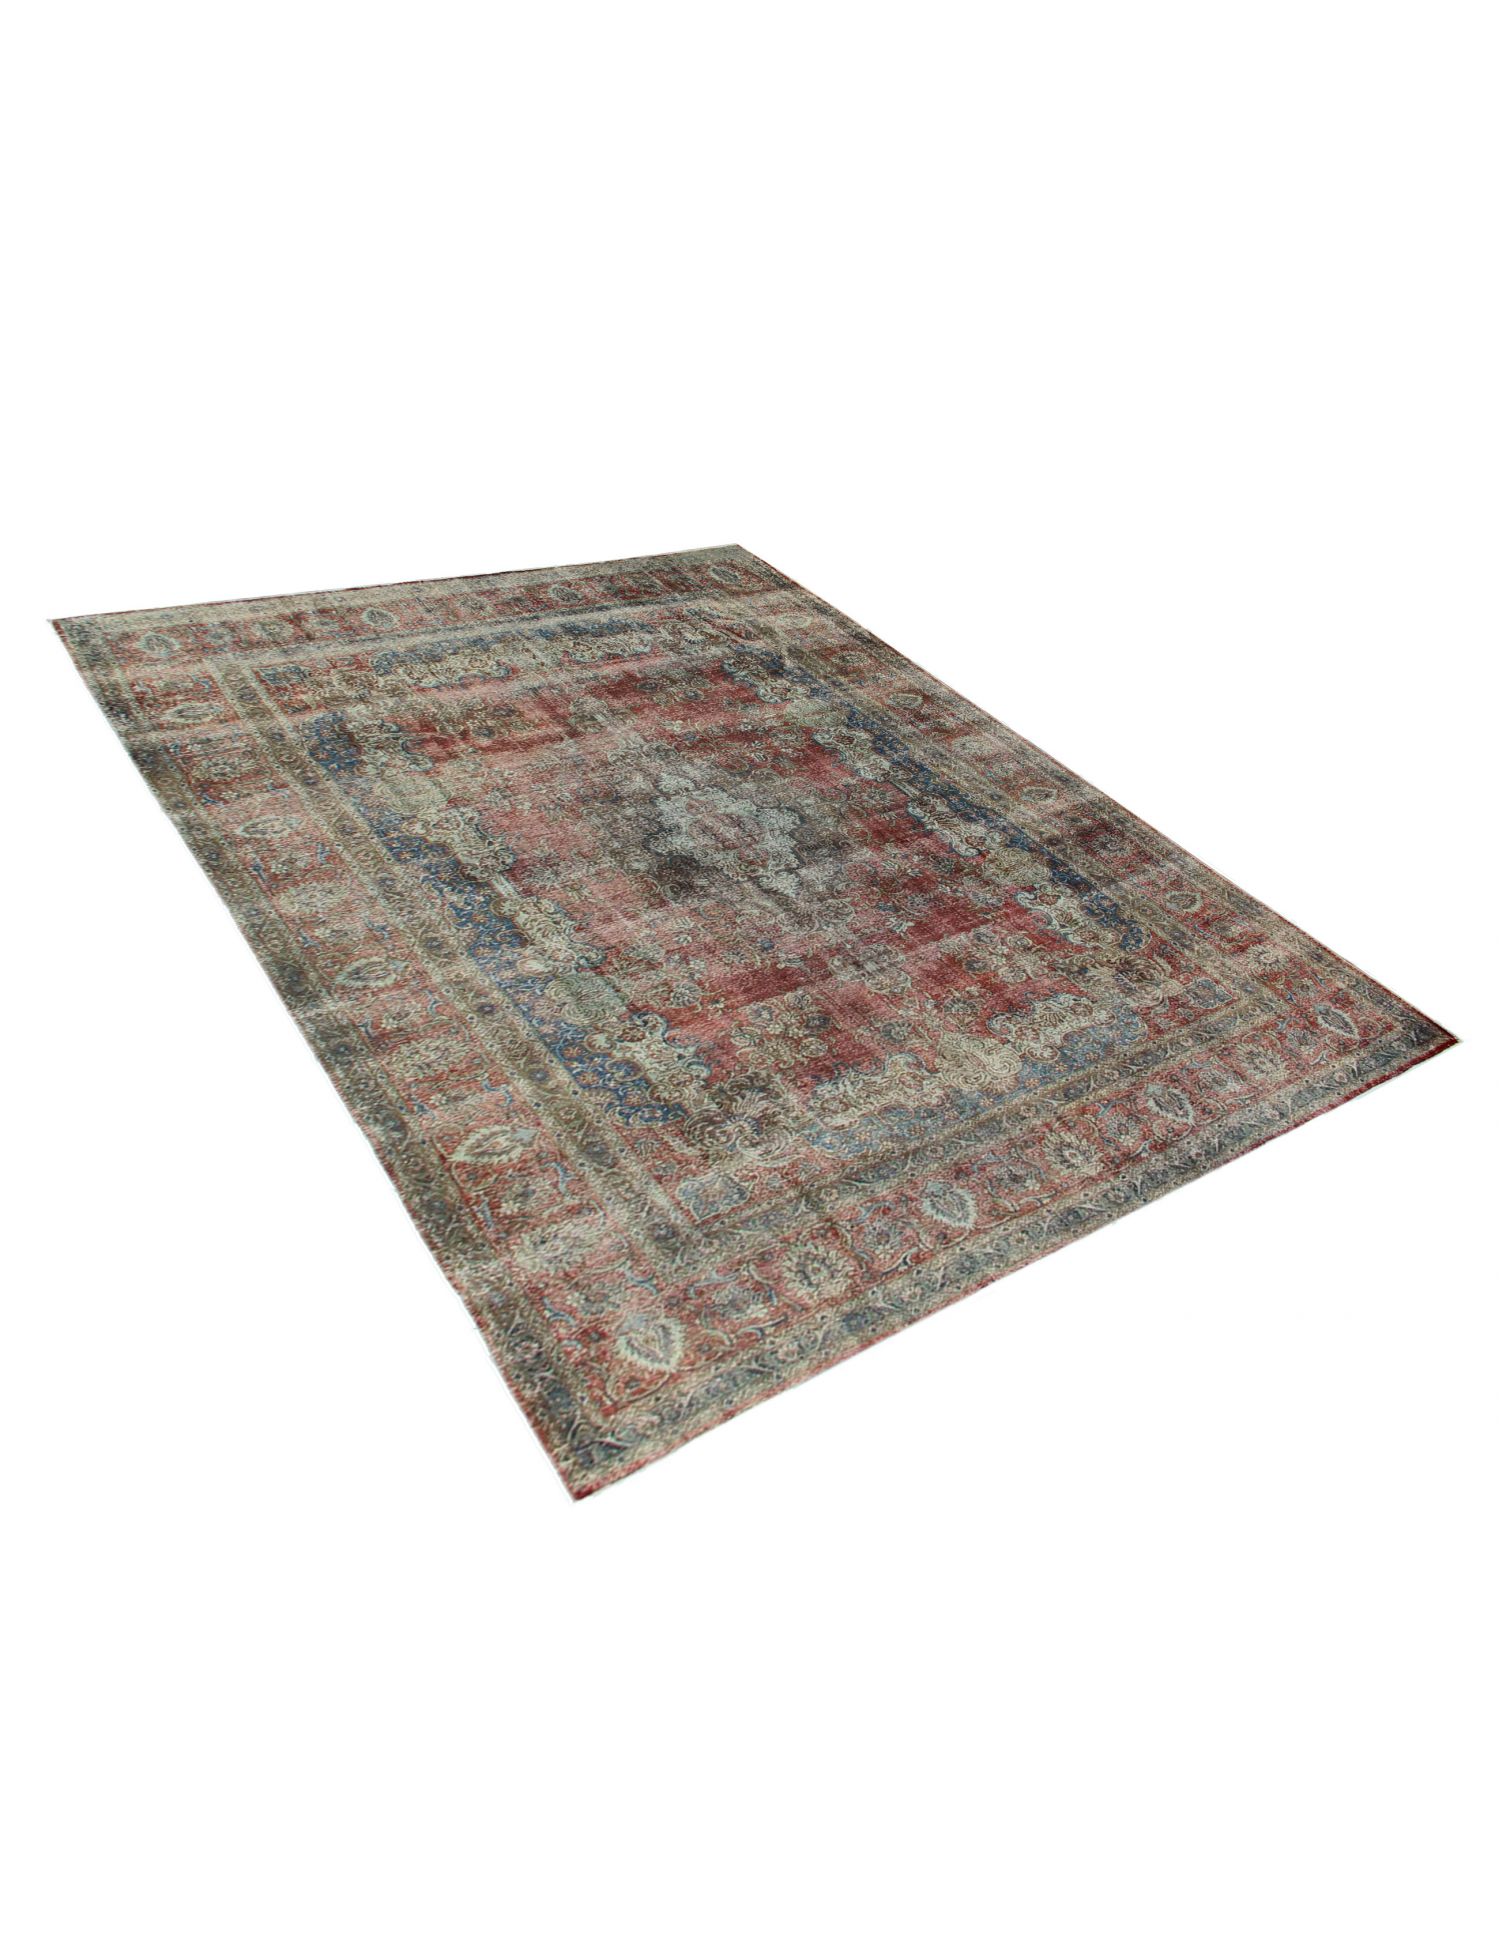 Persian Vintage Carpet  brown <br/>500 x 340 cm